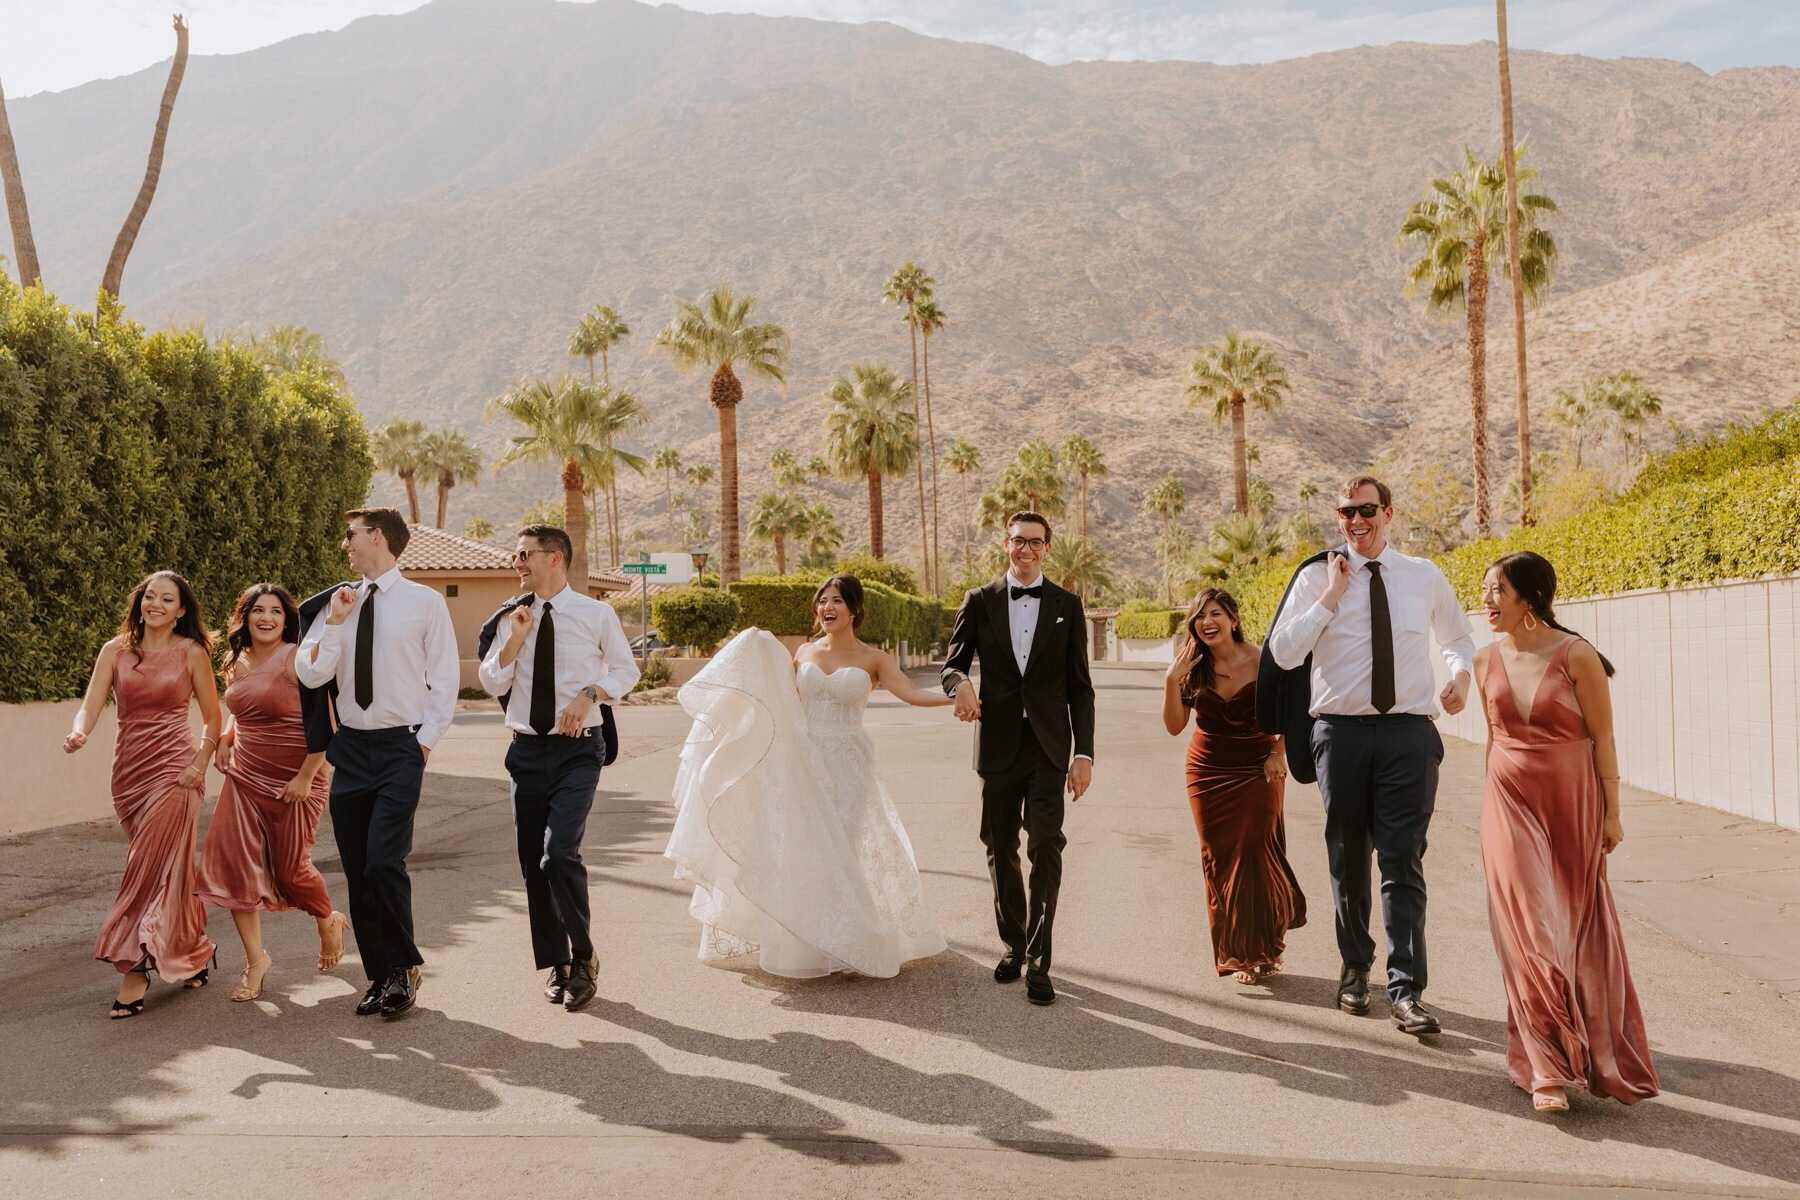 Palm Springs Bridesmaids and Groomsmen, Palm Springs Wedding Photographer, Photo by Tida Svy